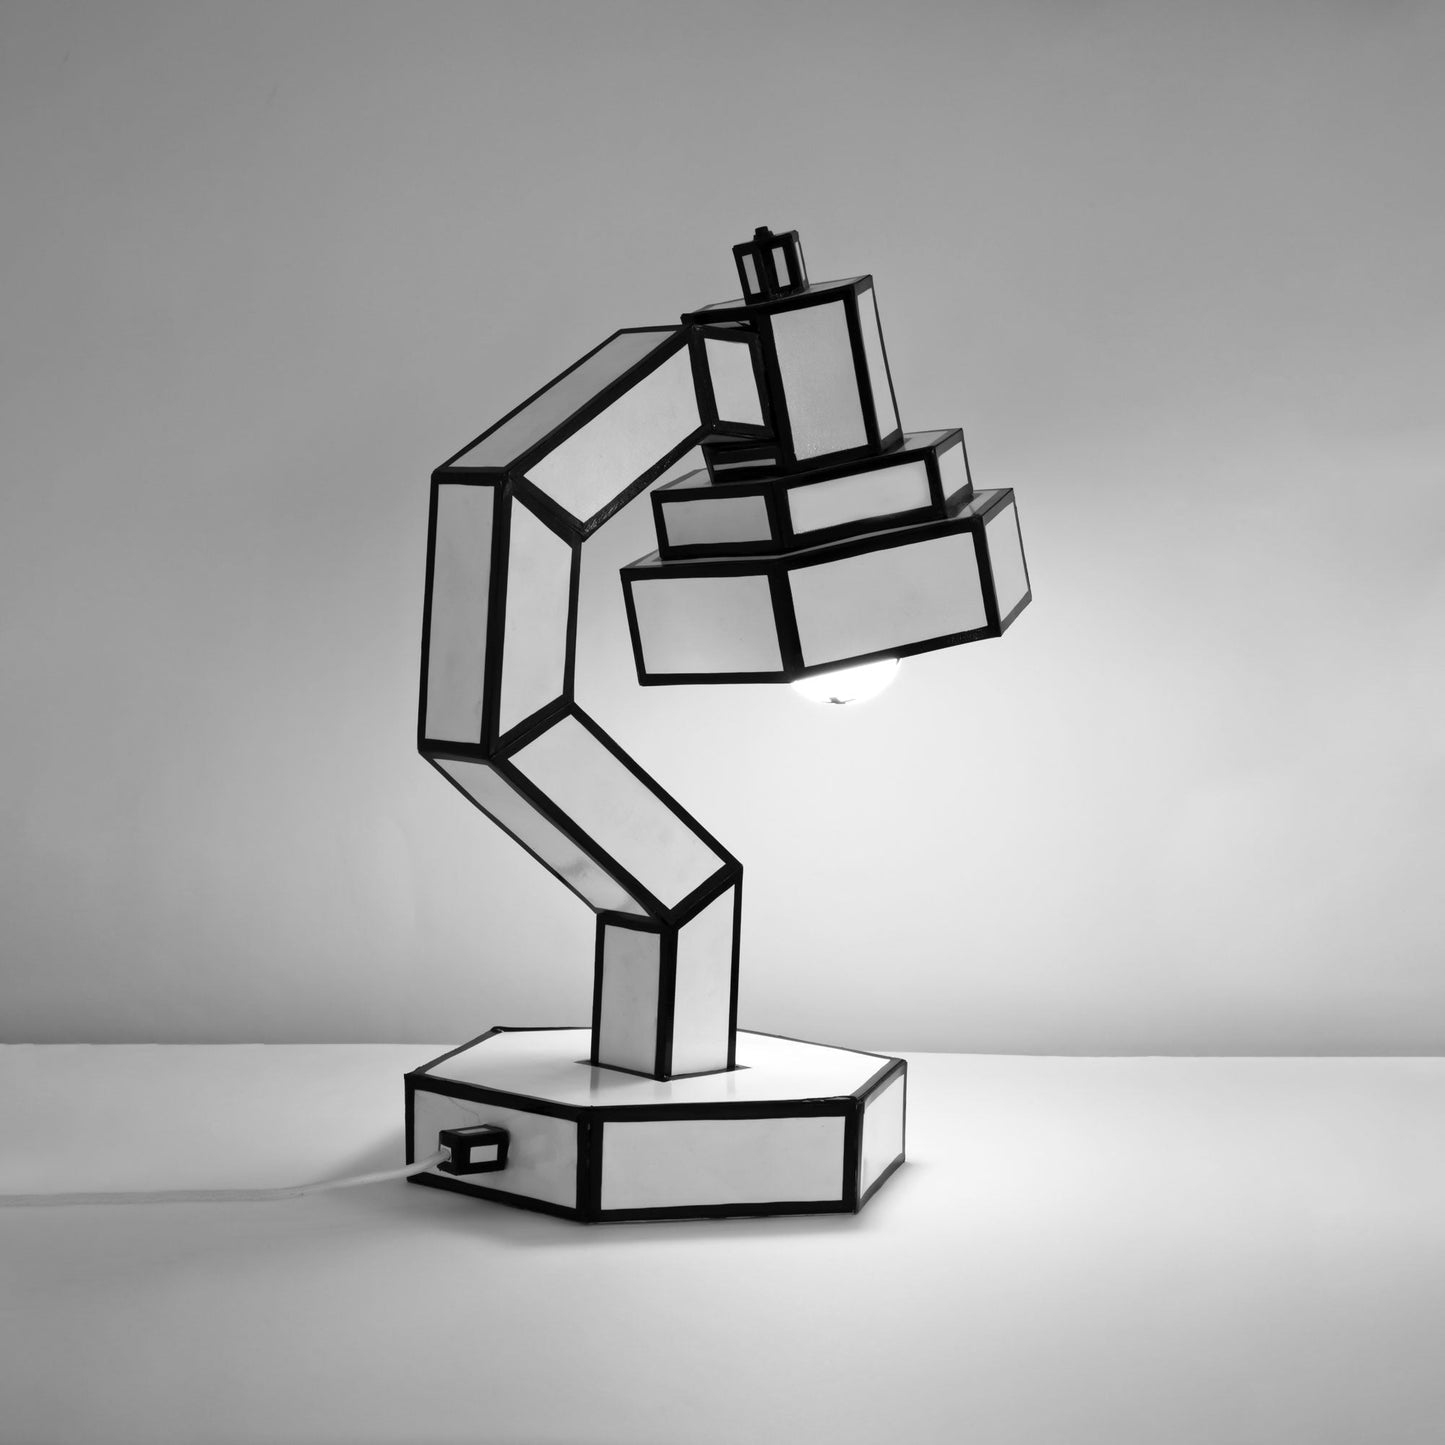 Cut & Paste Desk Lamp